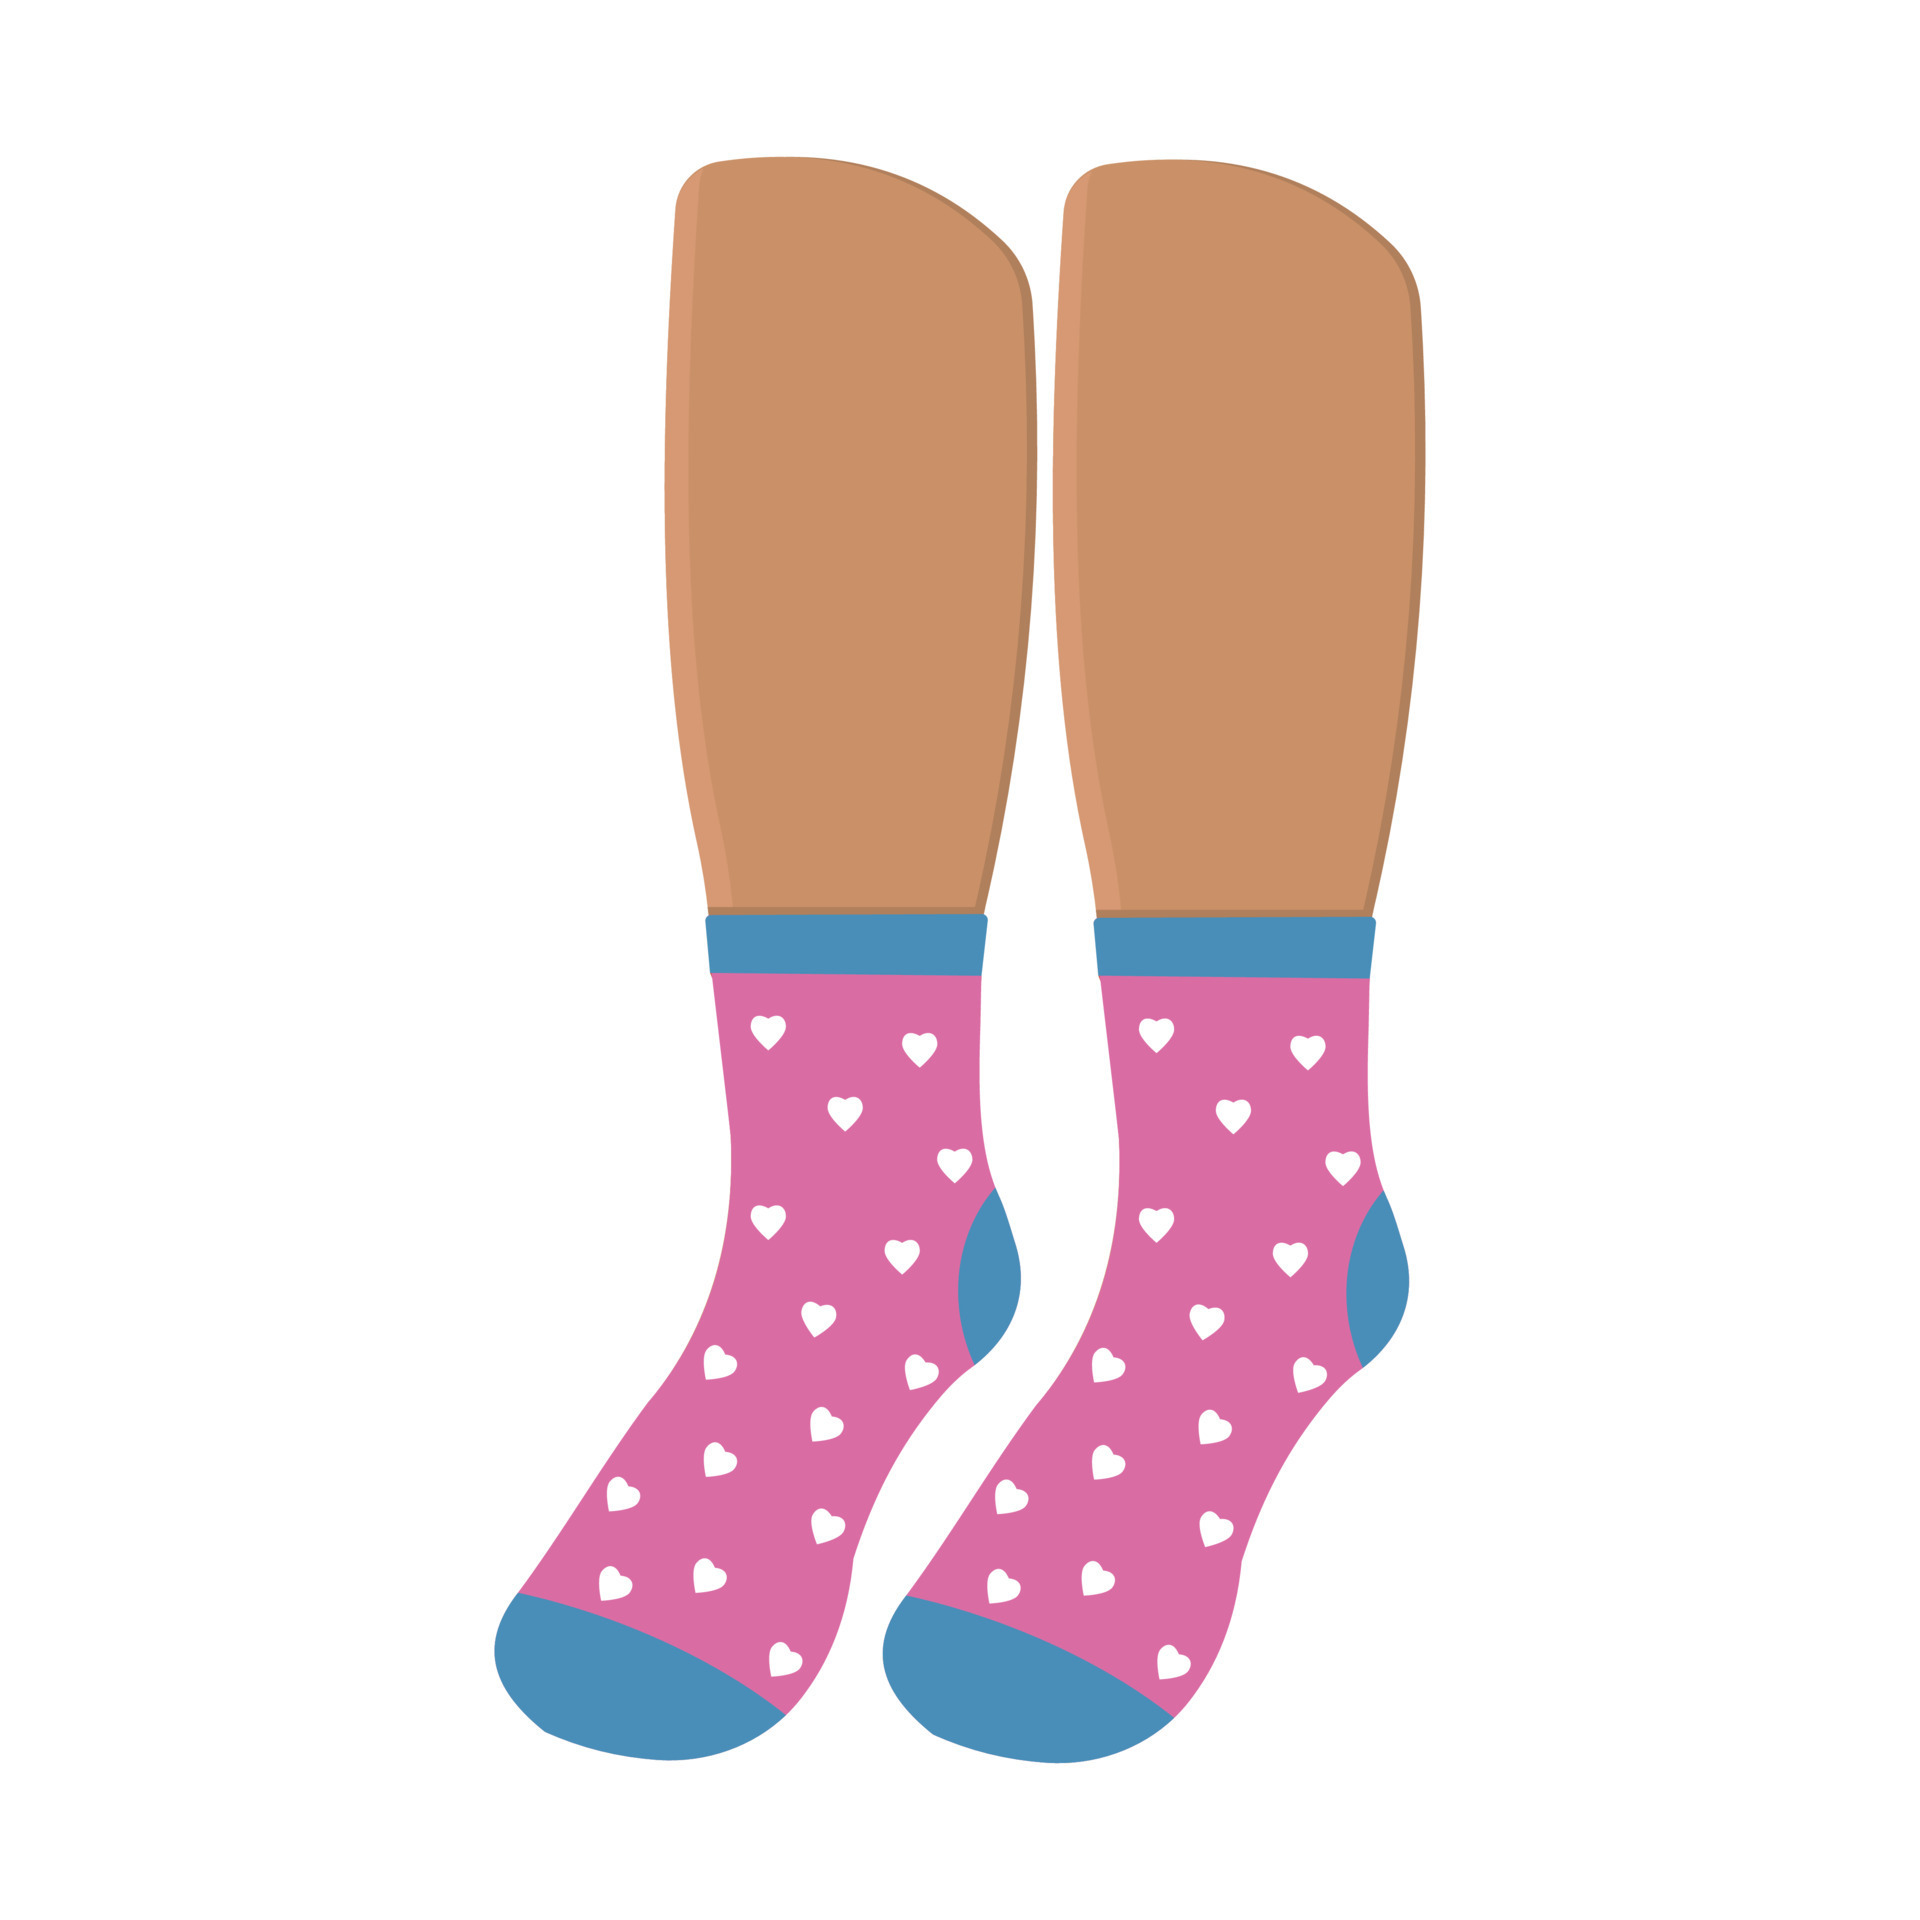 Colored socks on feet, color vector isolated cartoon-style